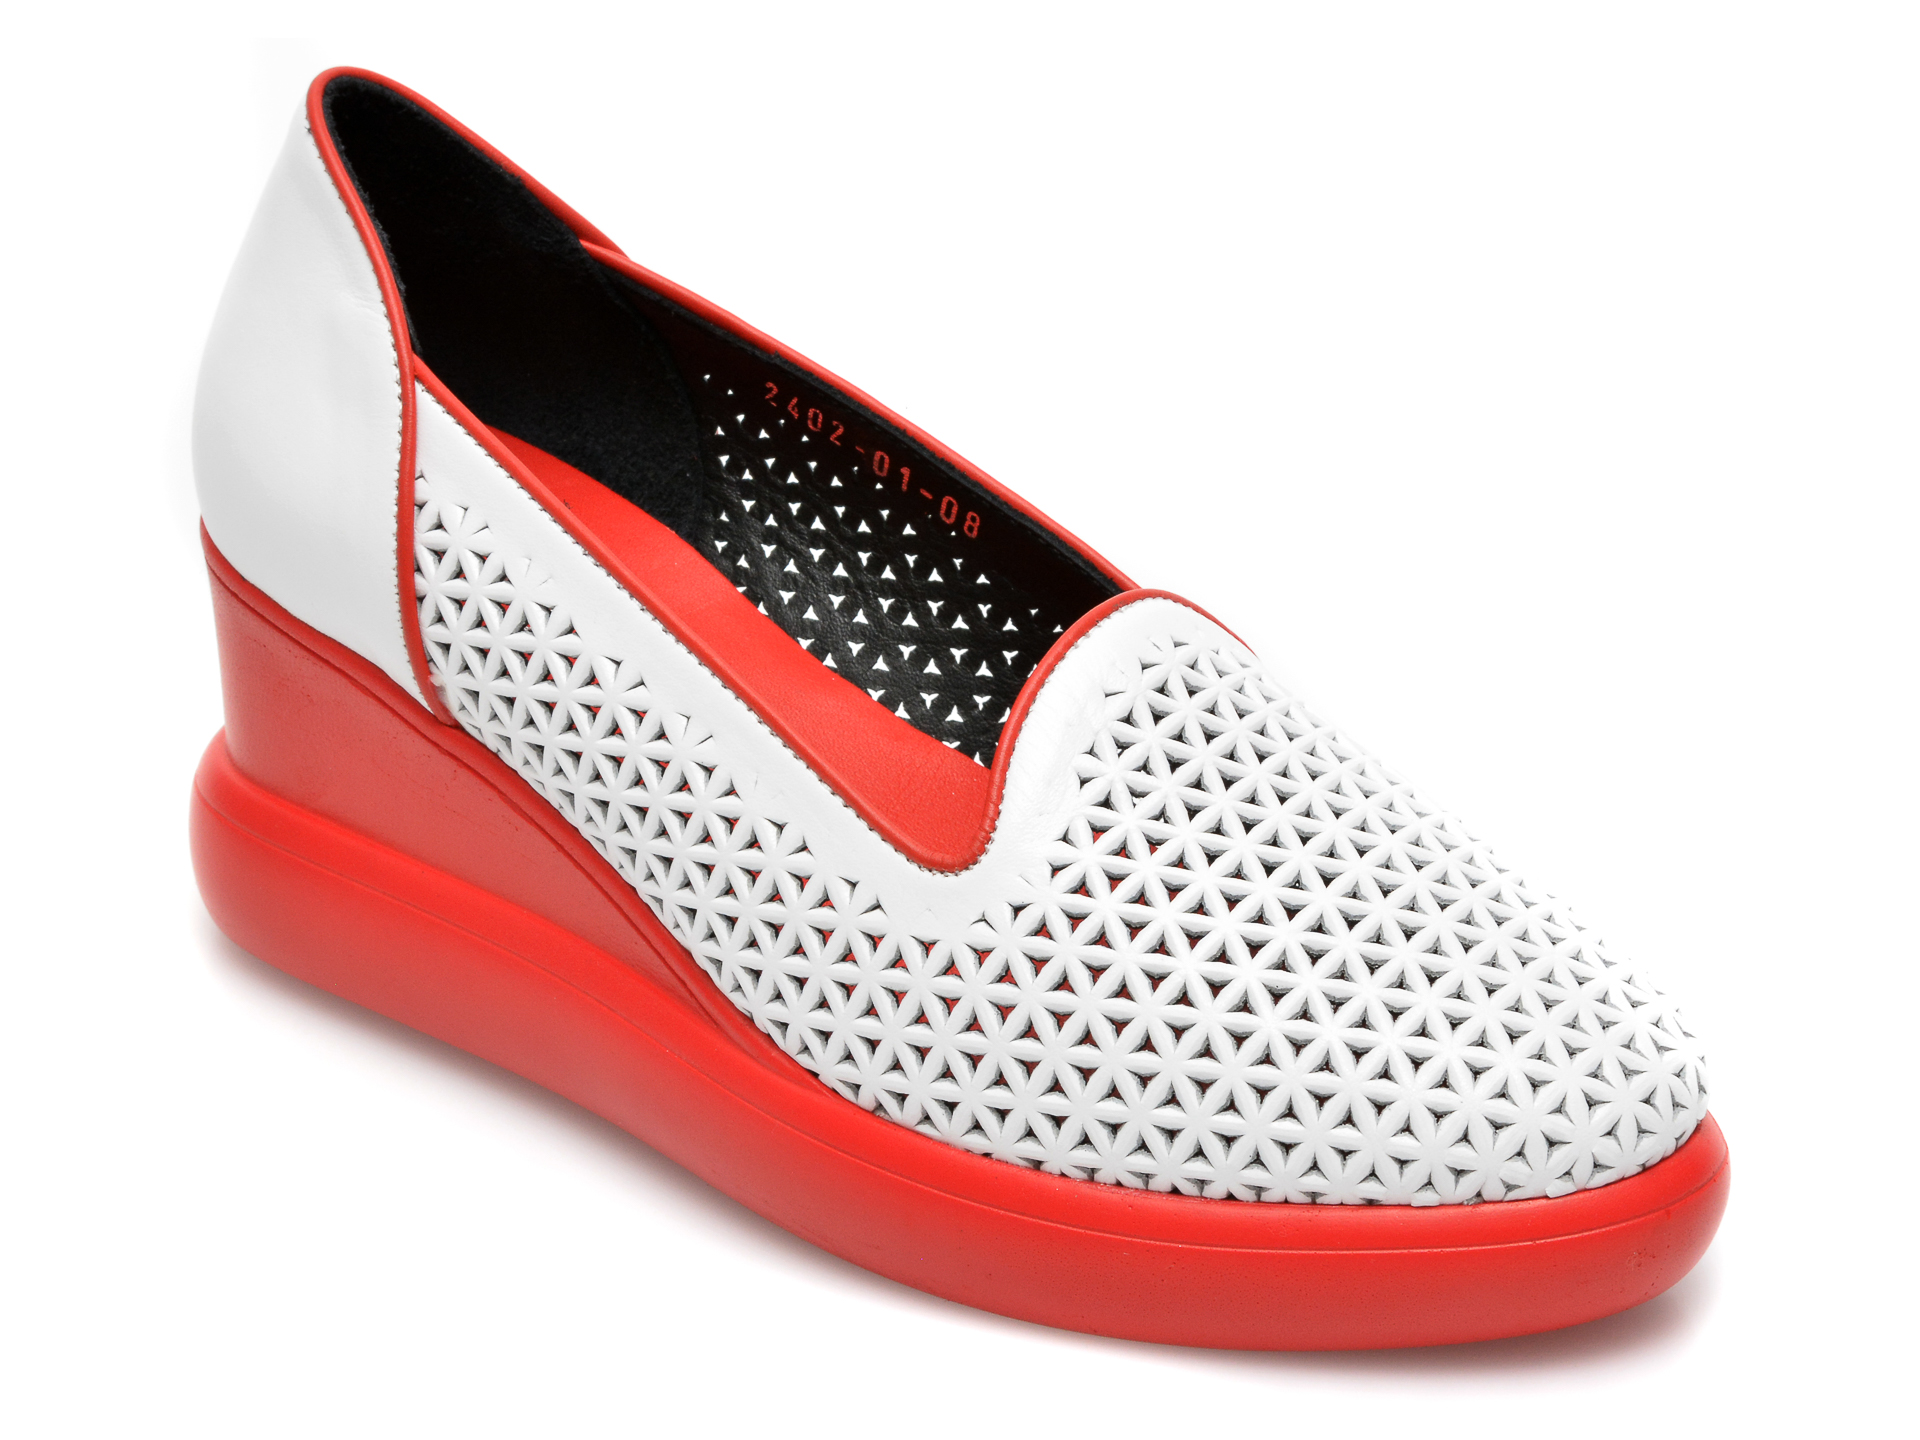 Pantofi DONNA STYLE albi, 2402, din piele naturala Donna Style